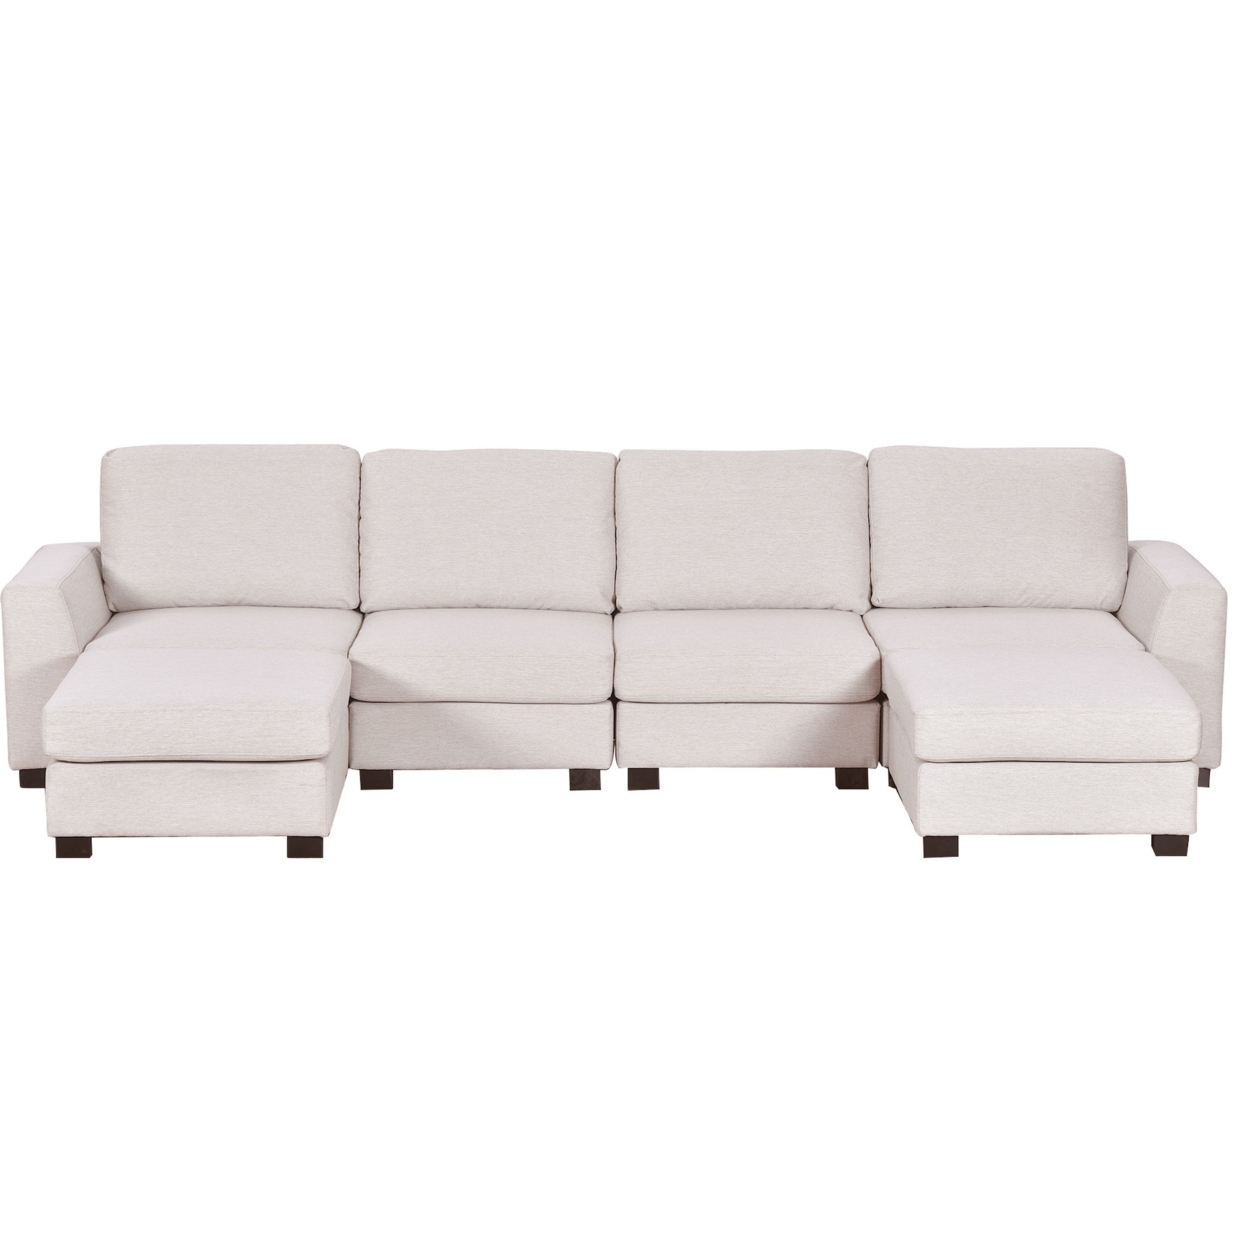 Hazel U Shape Sectional Sofa, Modern Modular With Ottomans, Beige Fabric- Saltoro Sherpi